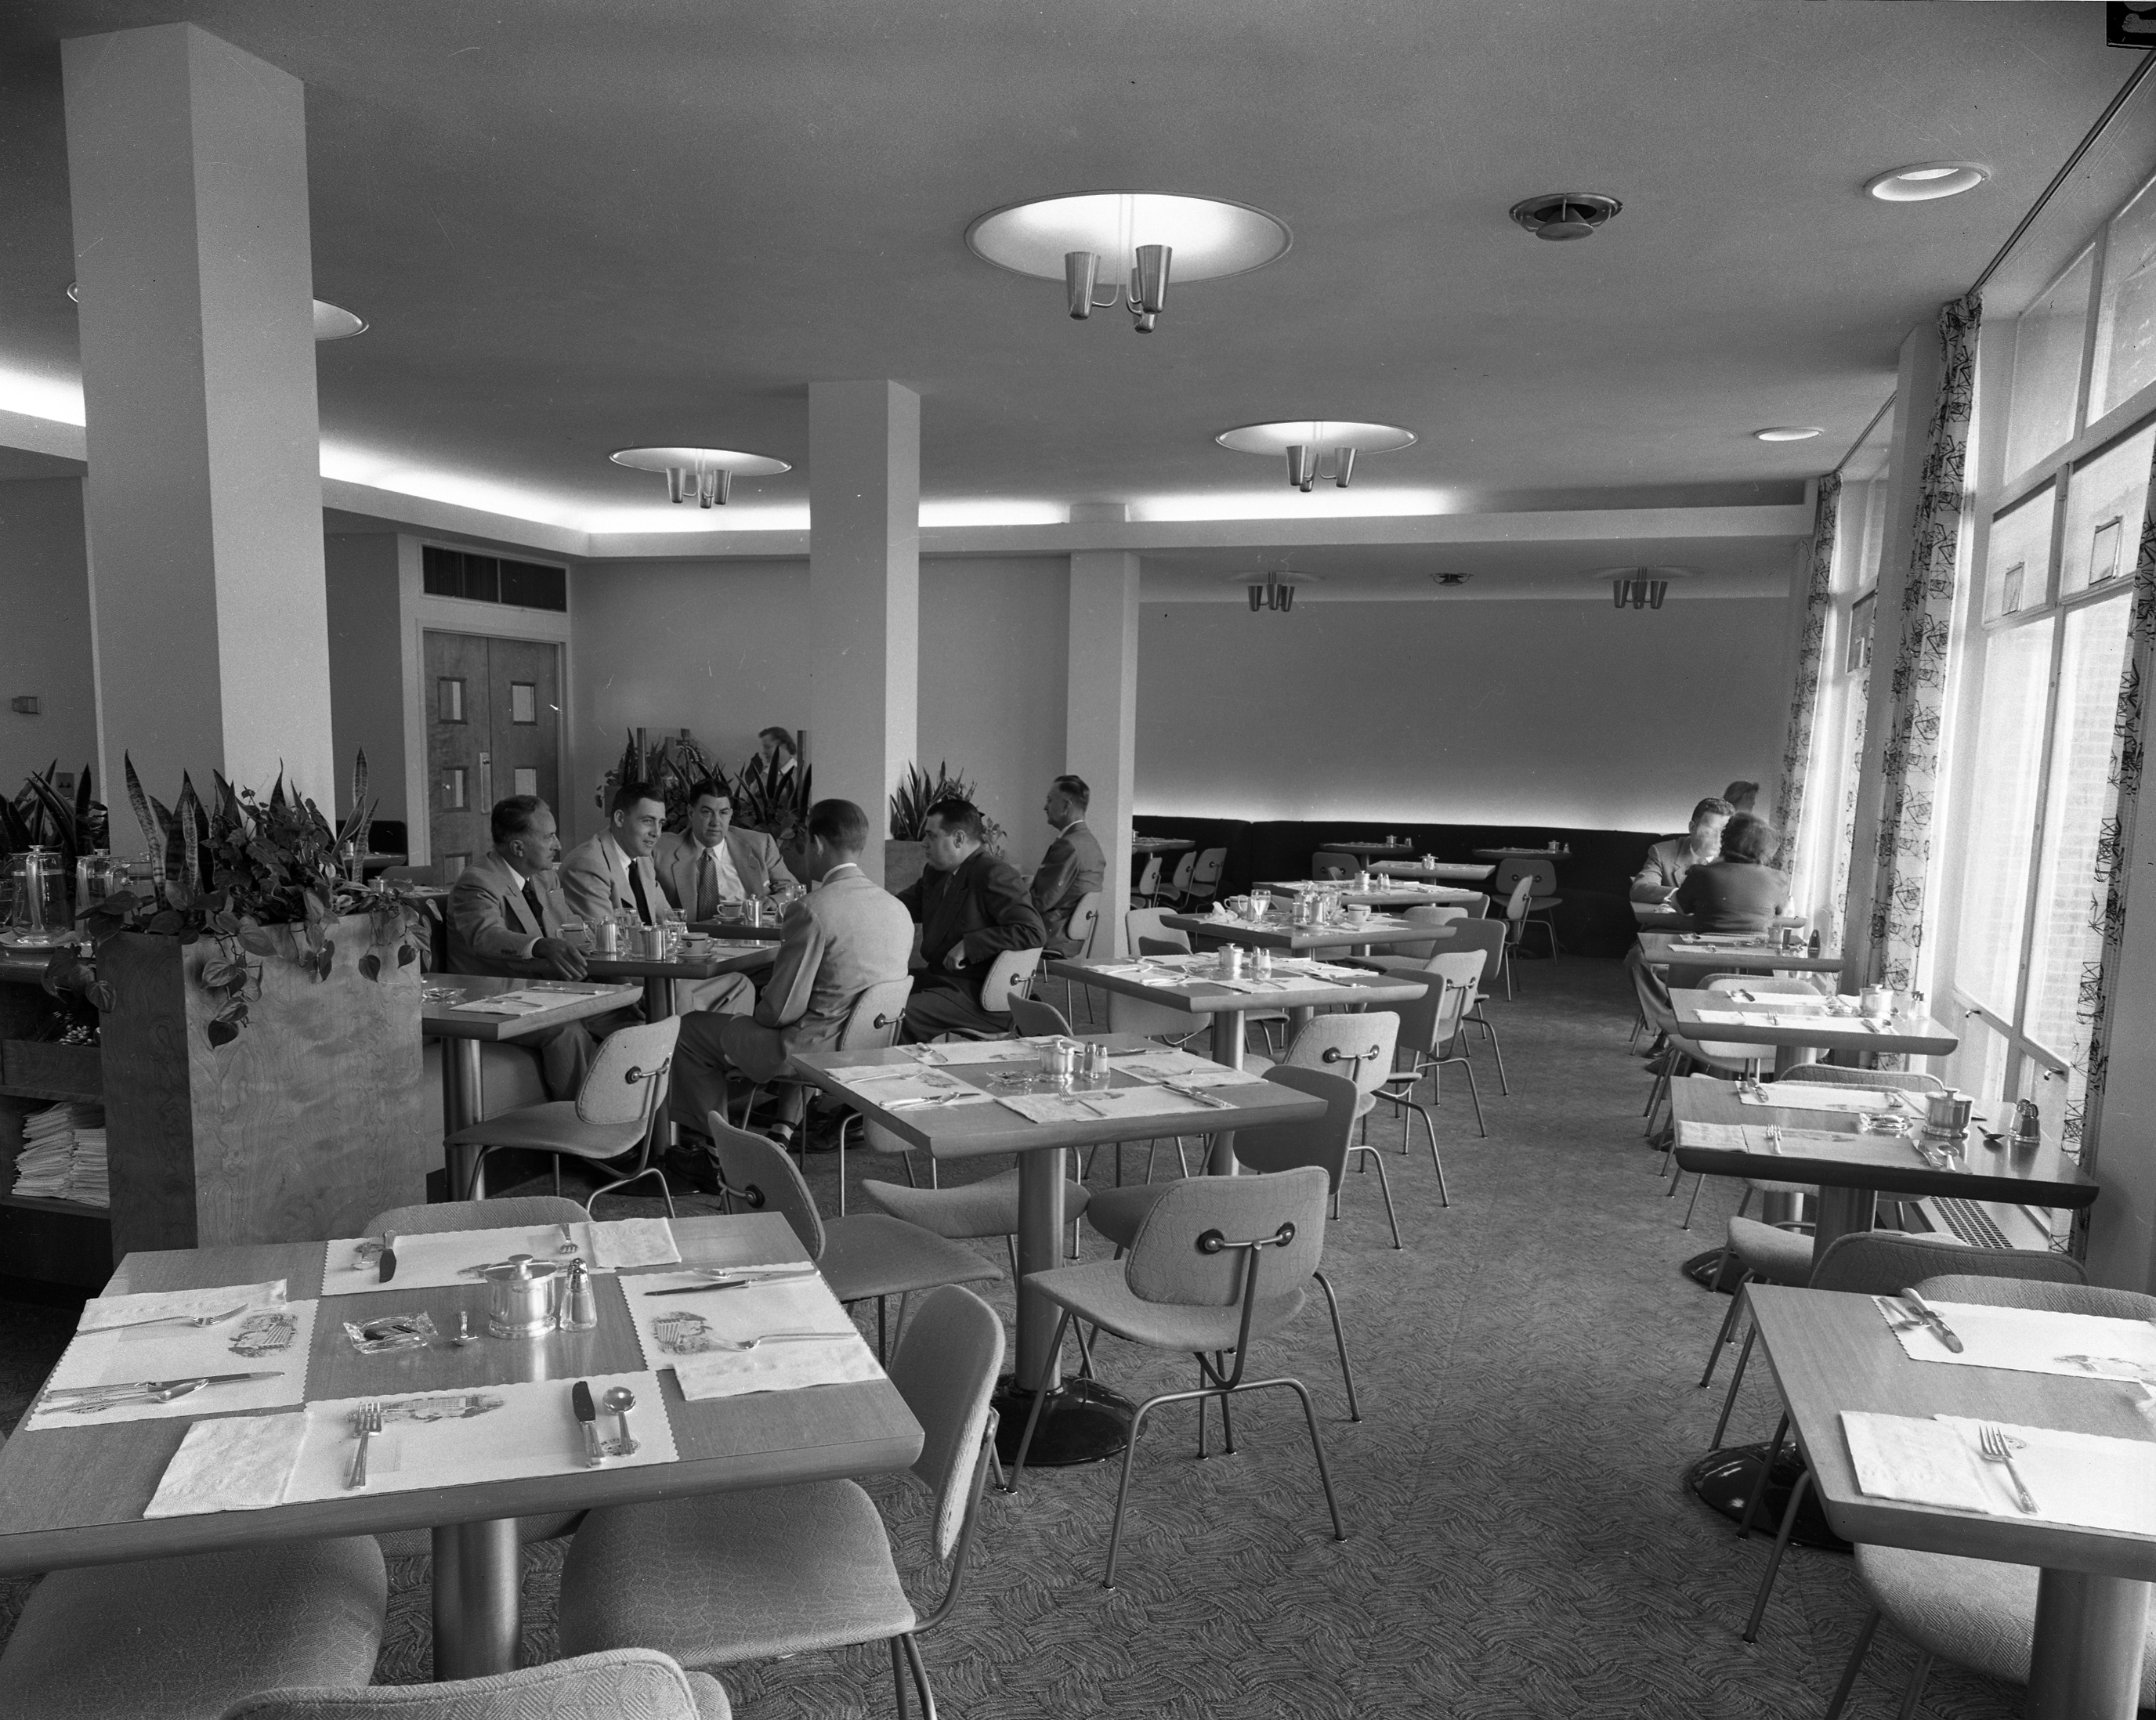 Dining room at the Kellogg Center, 1953